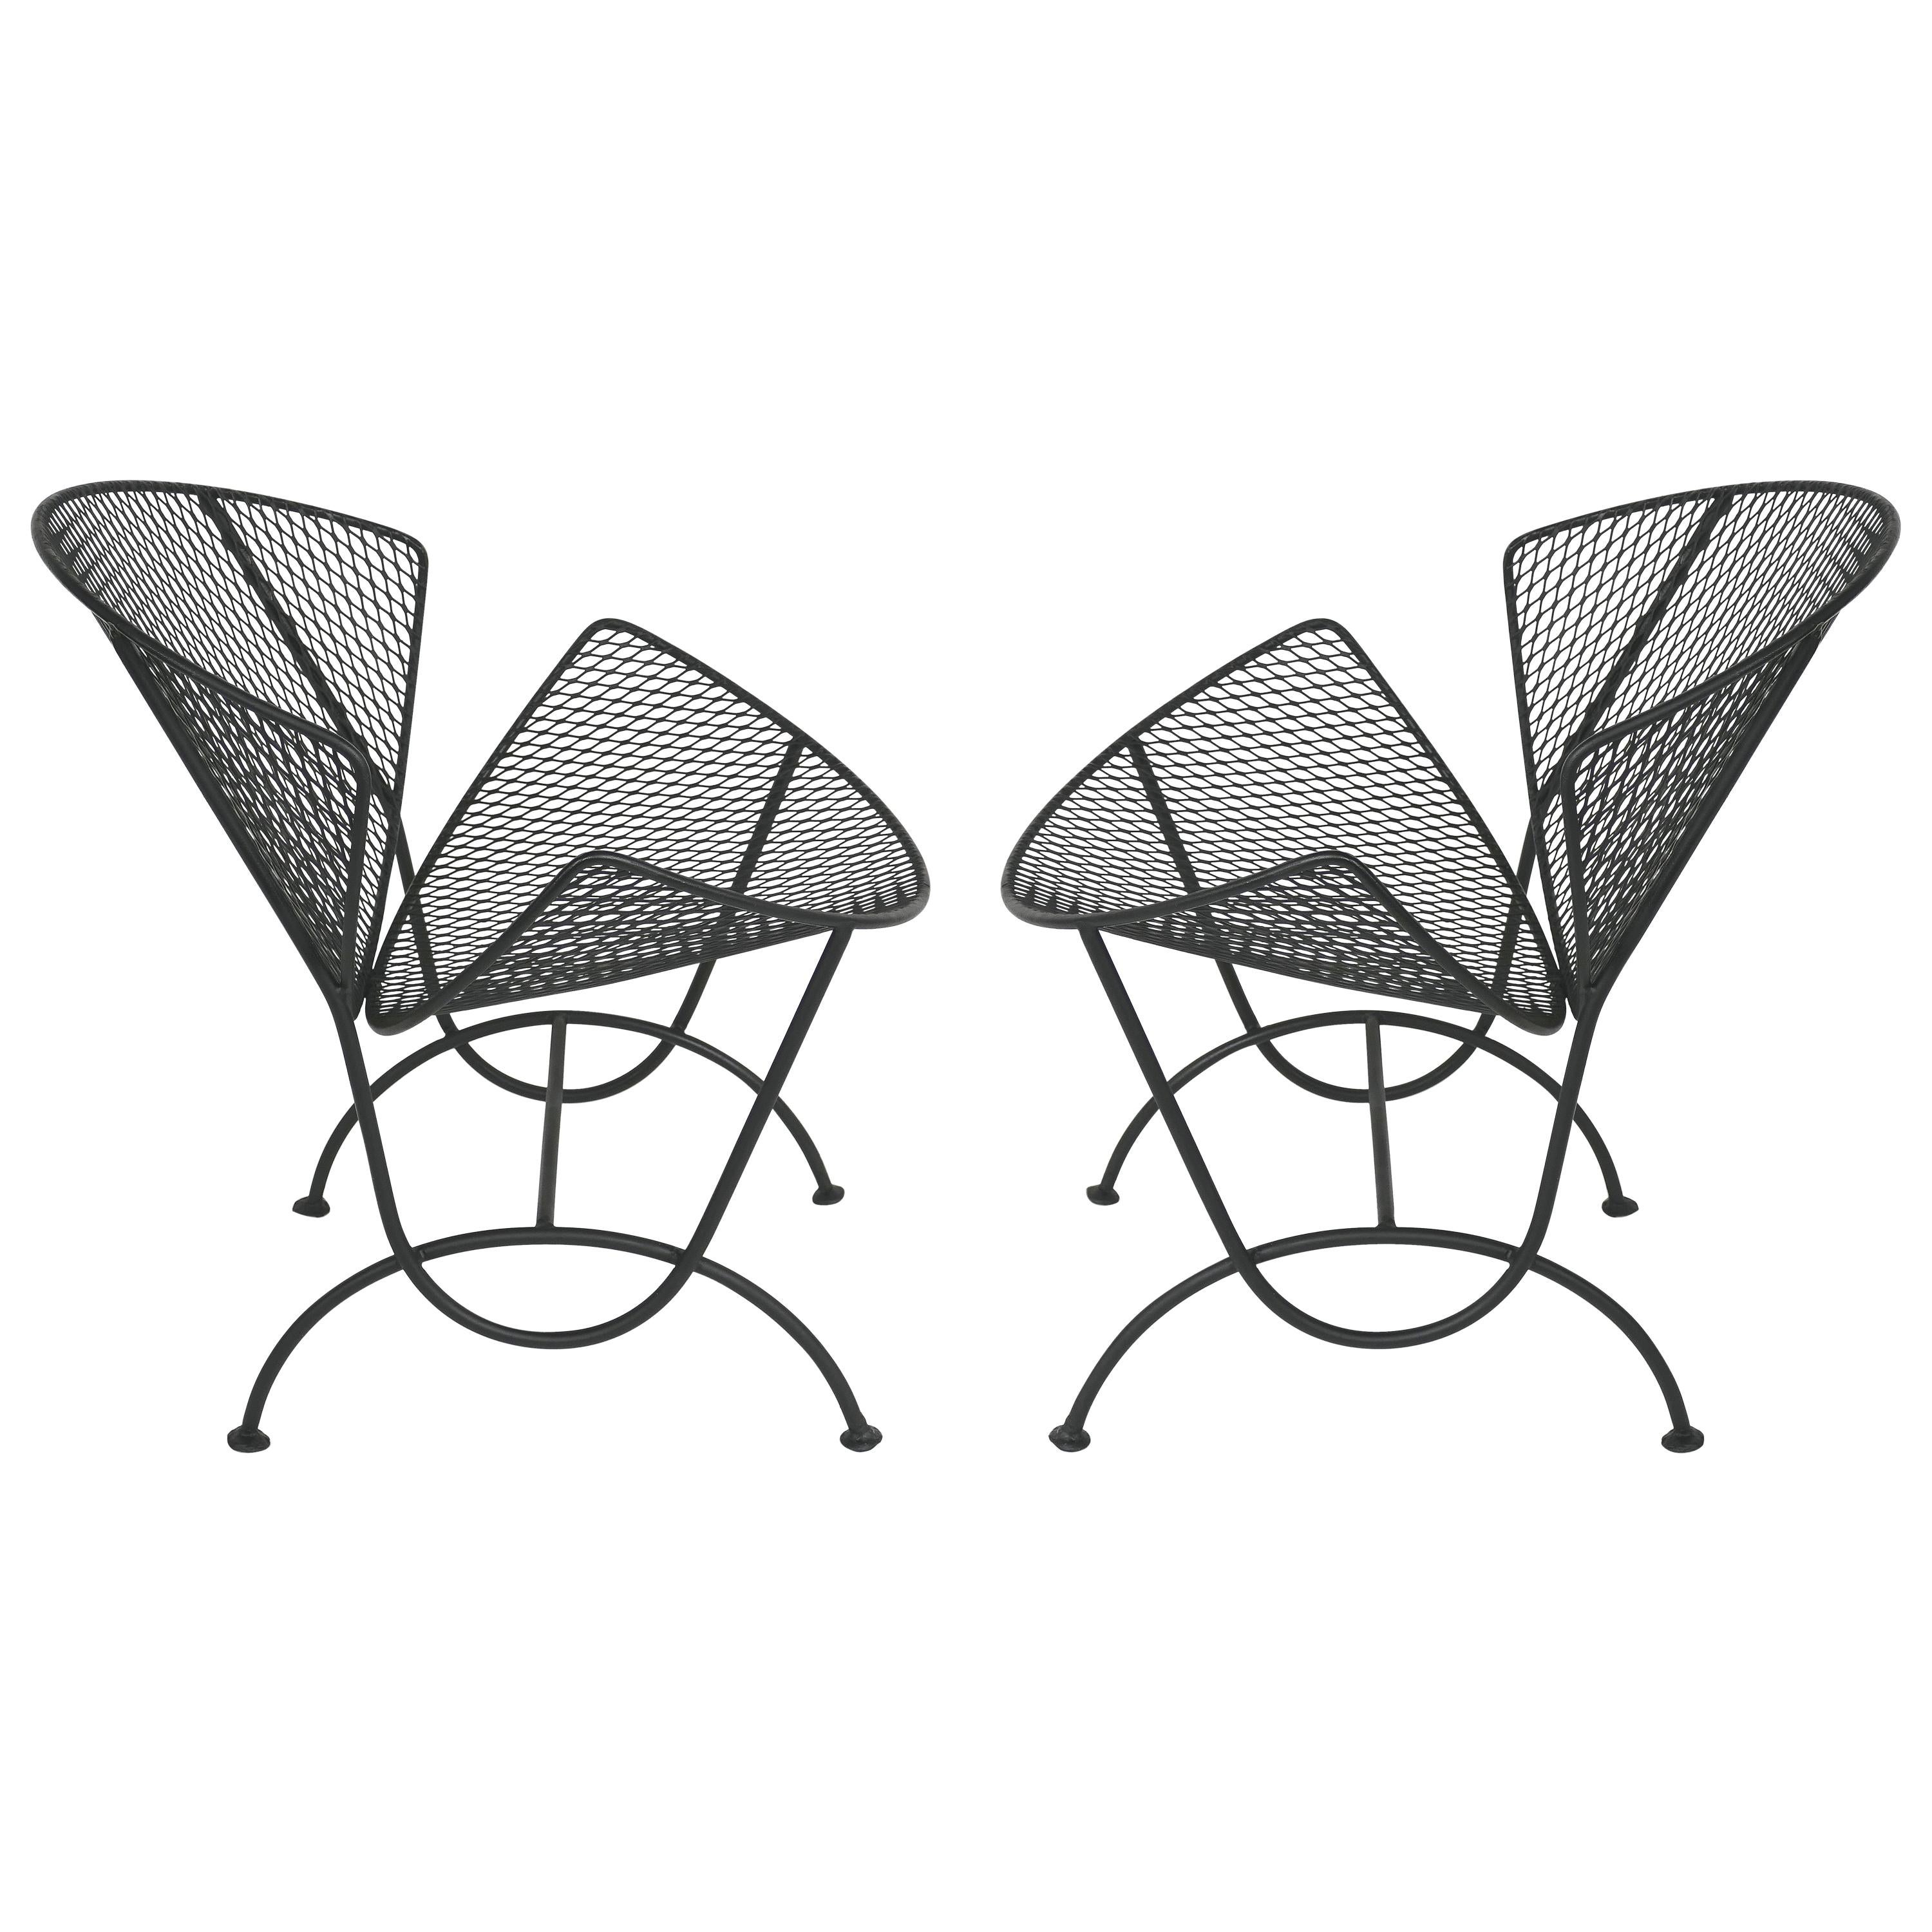 Maurizio Tempestini for Salterini Wrought Iron Chairs, "Orange Slice-Clam Shell"